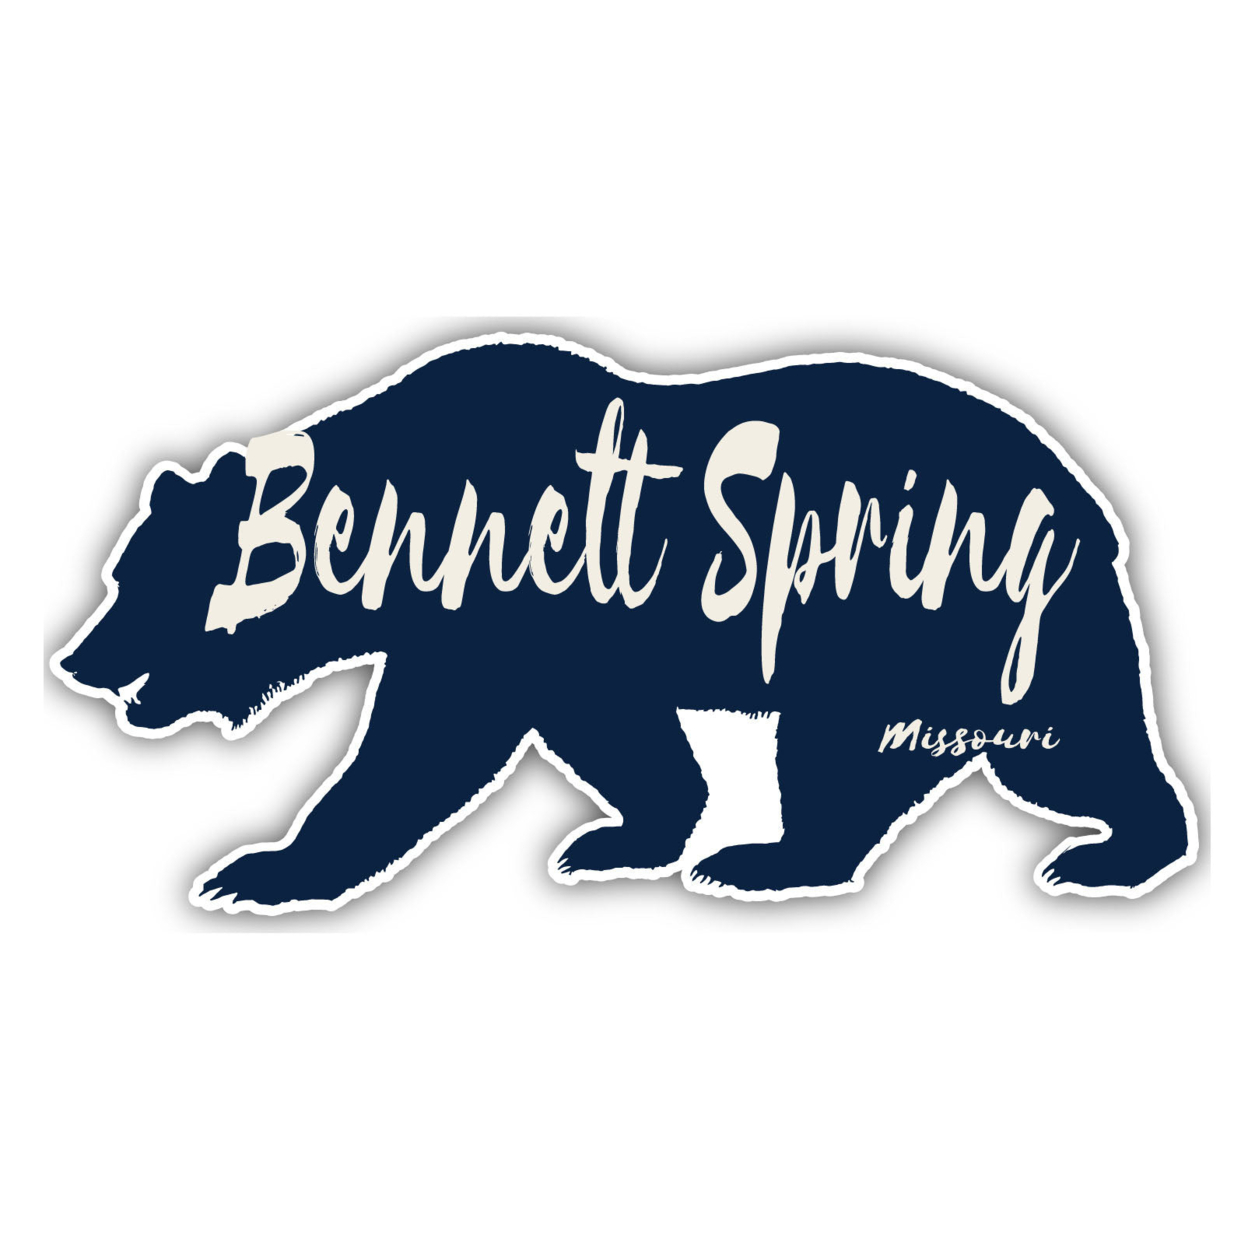 Bennett Spring Missouri Souvenir Decorative Stickers (Choose Theme And Size) - 4-Pack, 6-Inch, Bear